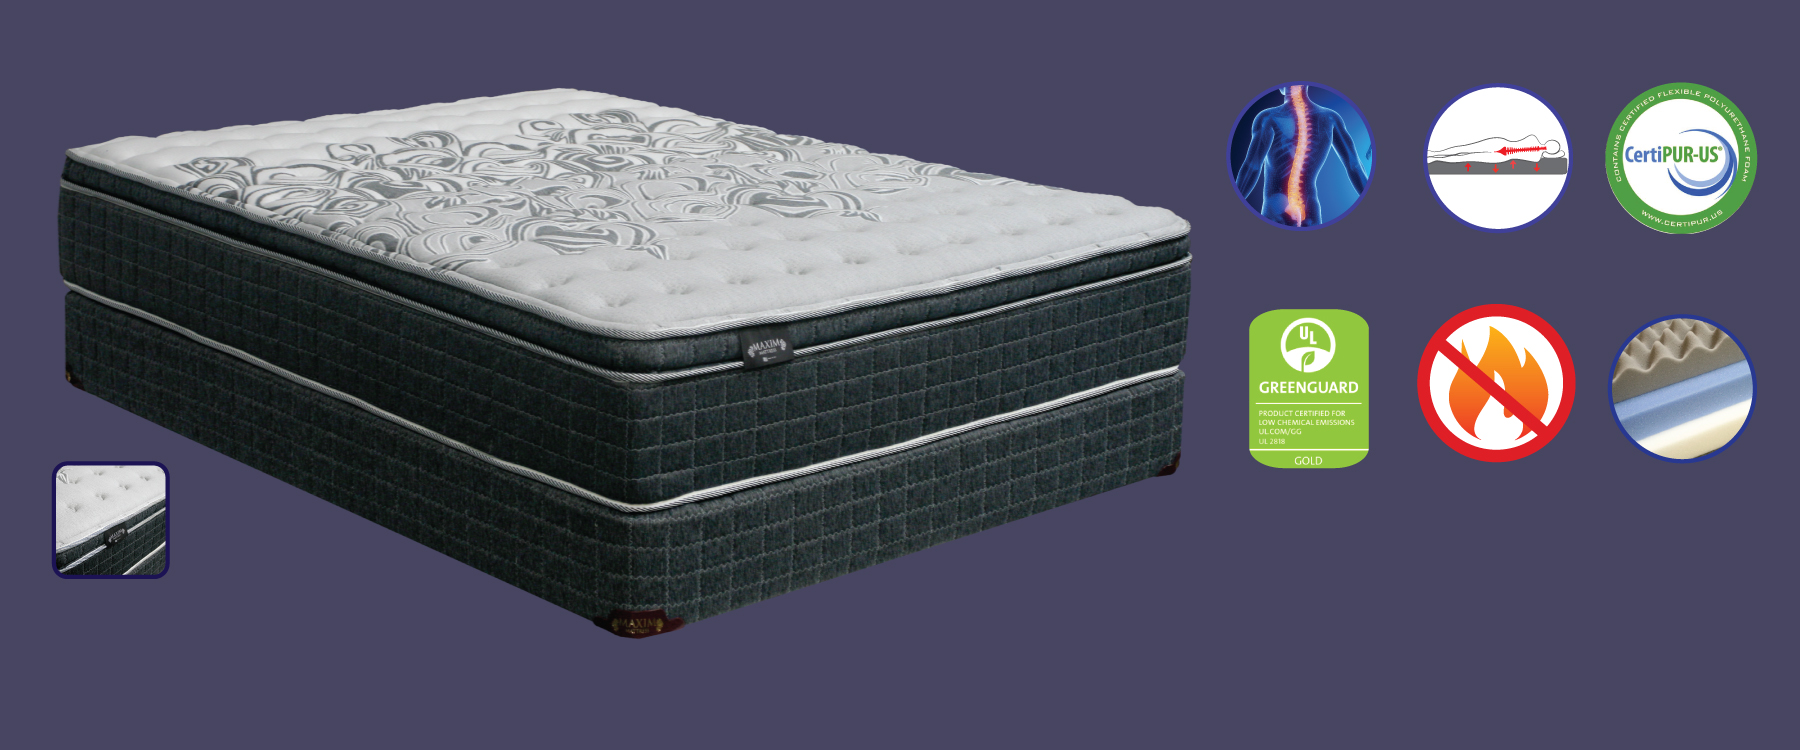 maxim mattress malibu luxury firm foam encase